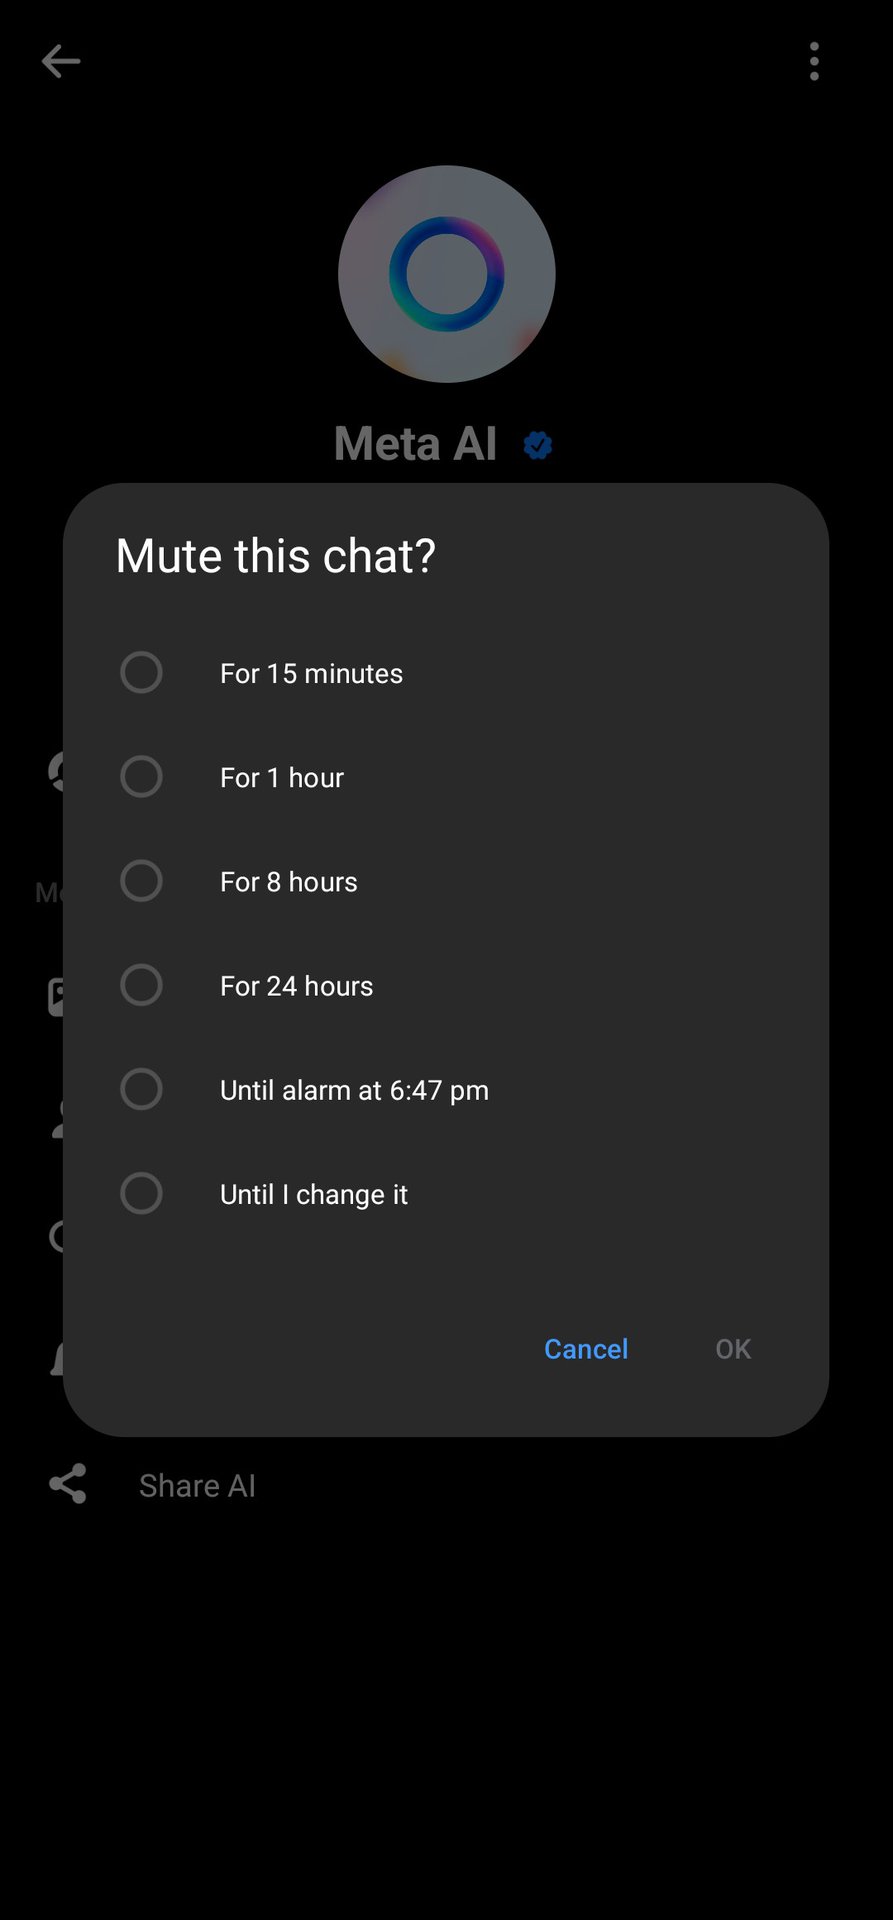 Messenger Meta AI chat mute options